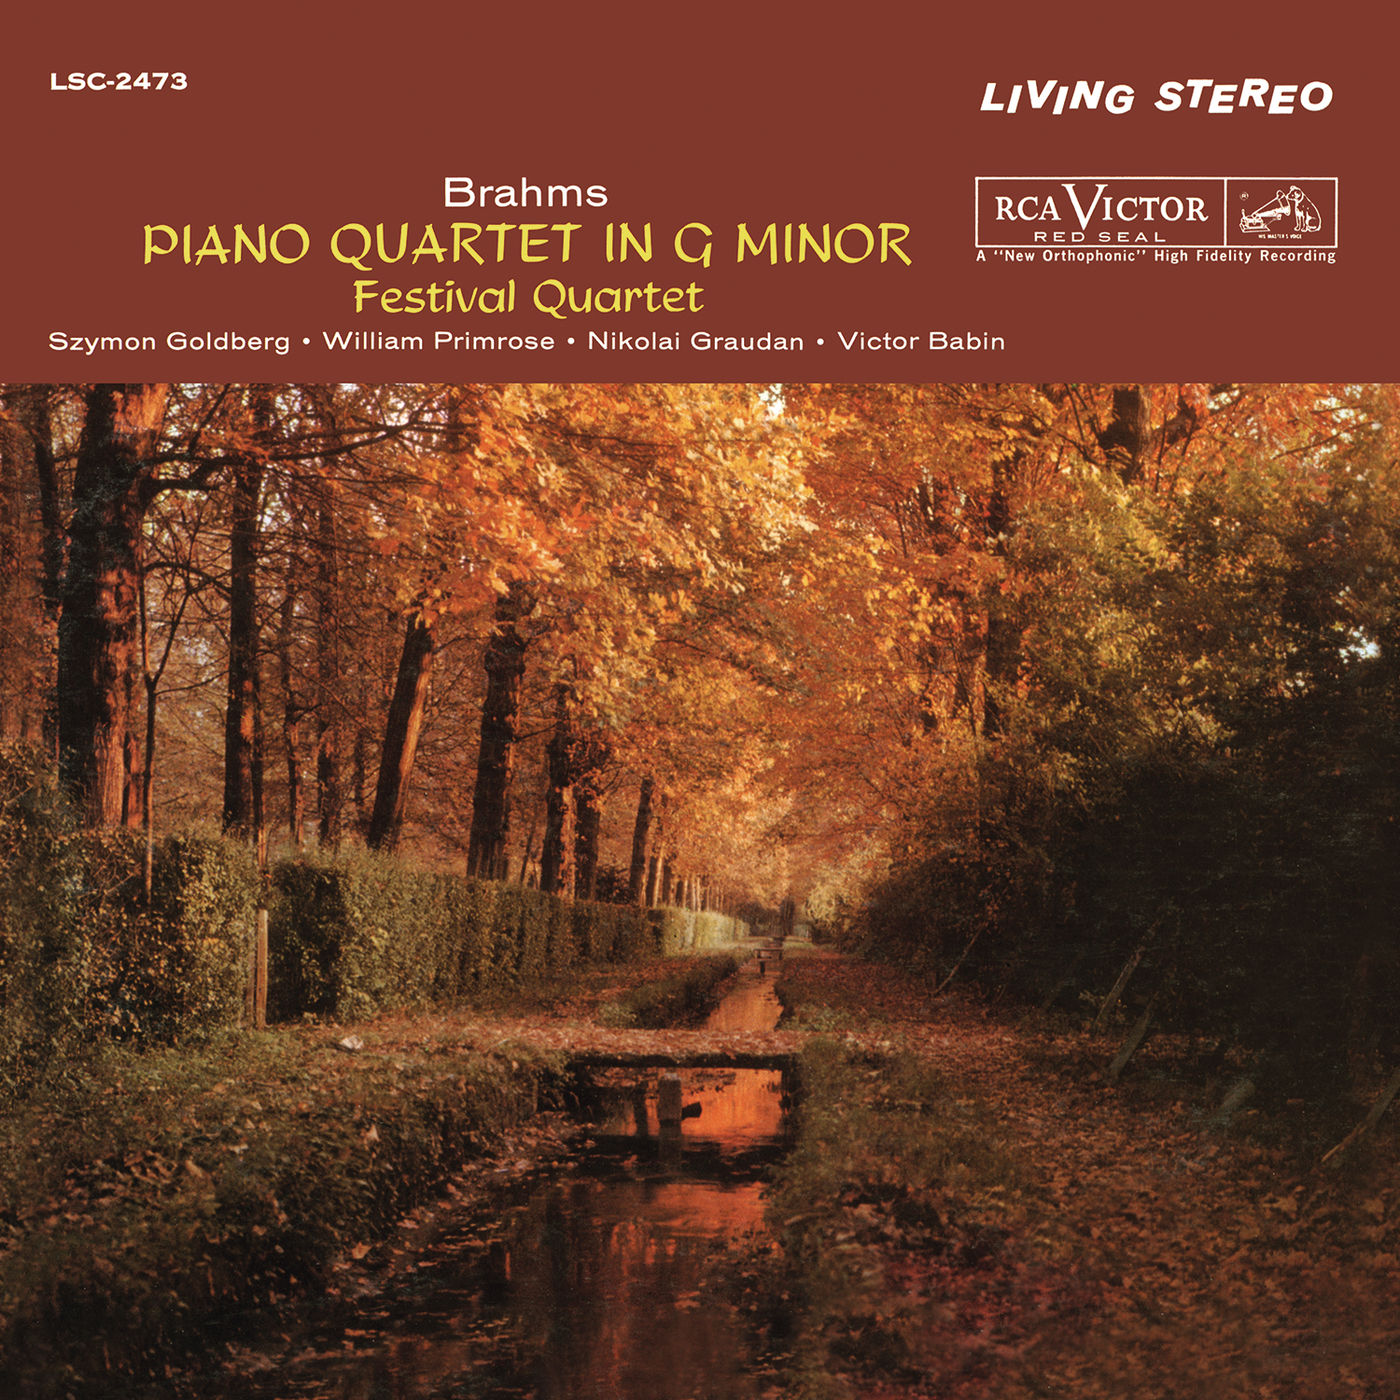 The Festival Quartet – Brahms- Piano Quartet No. 1 in G Minor, Op. 25